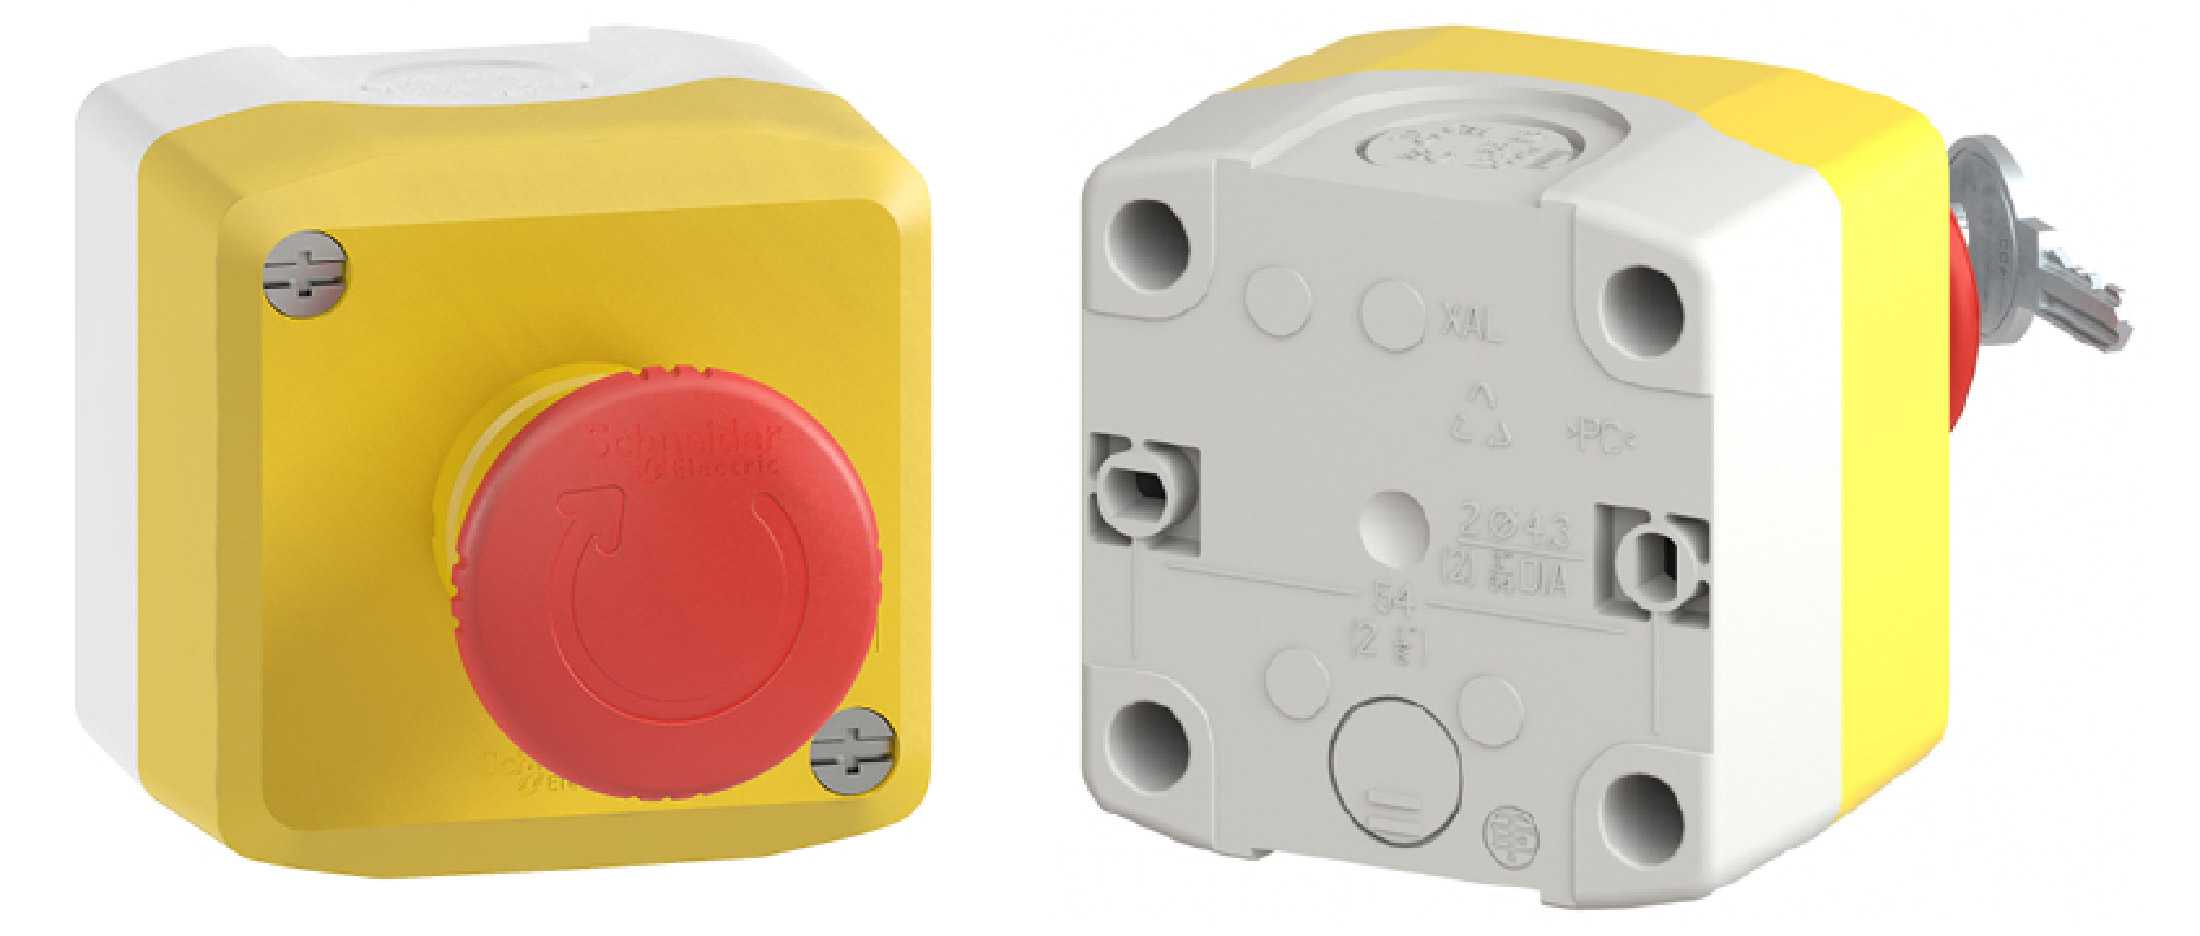 Schneider Electric XALK178E Emergency Button 40mm.